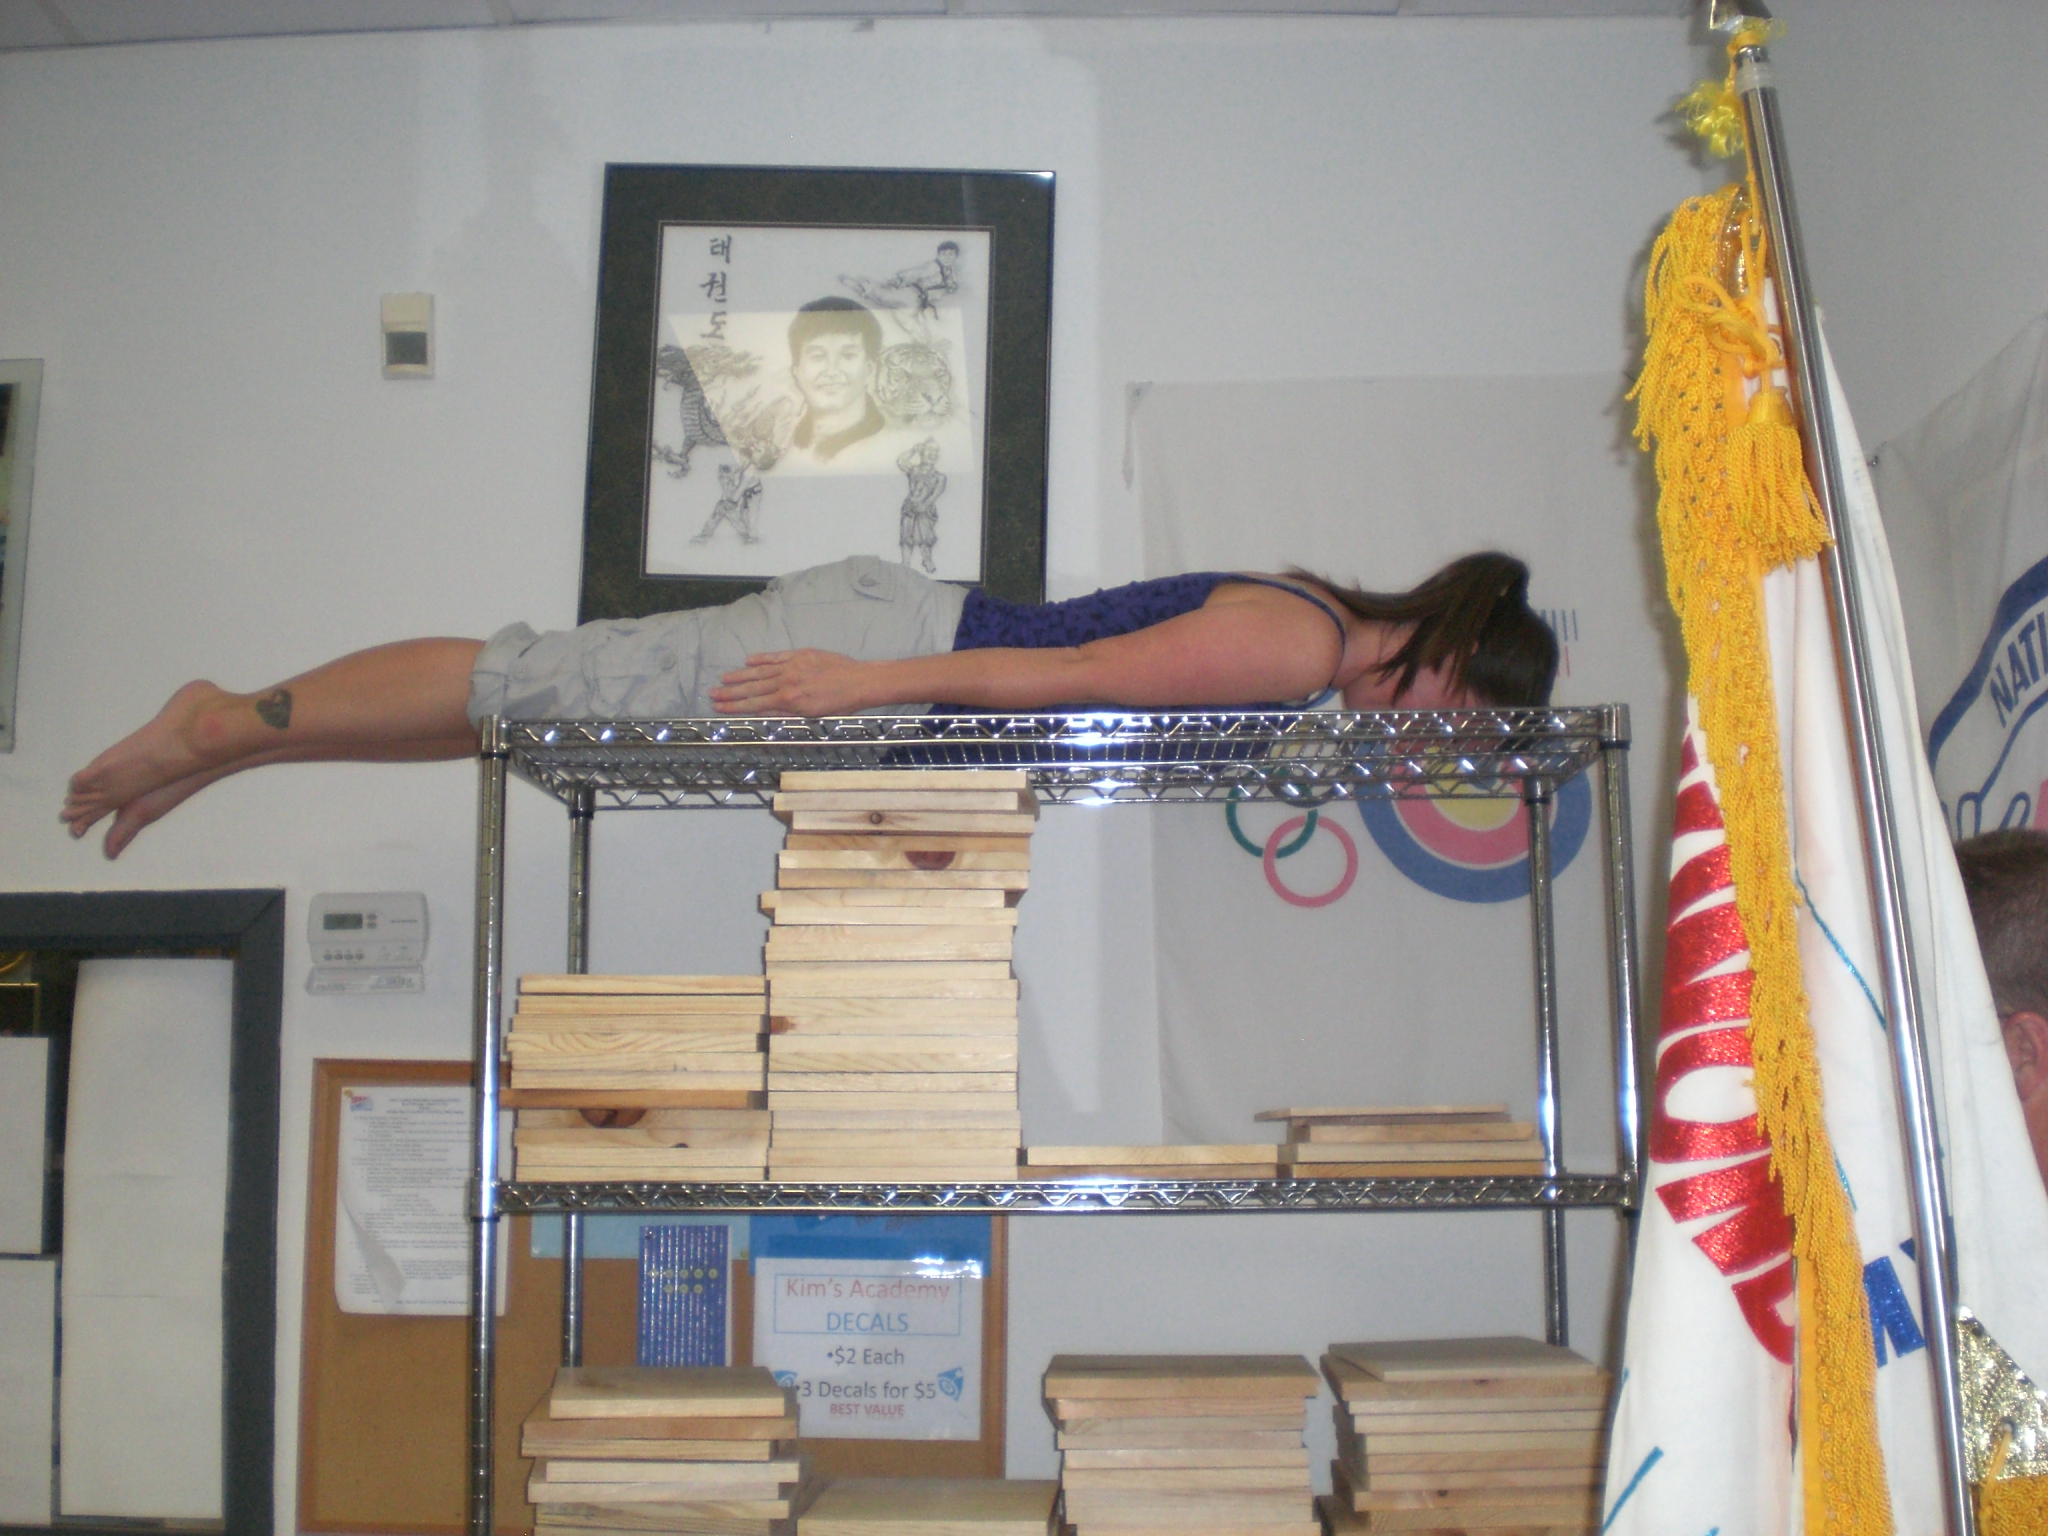 Planking It